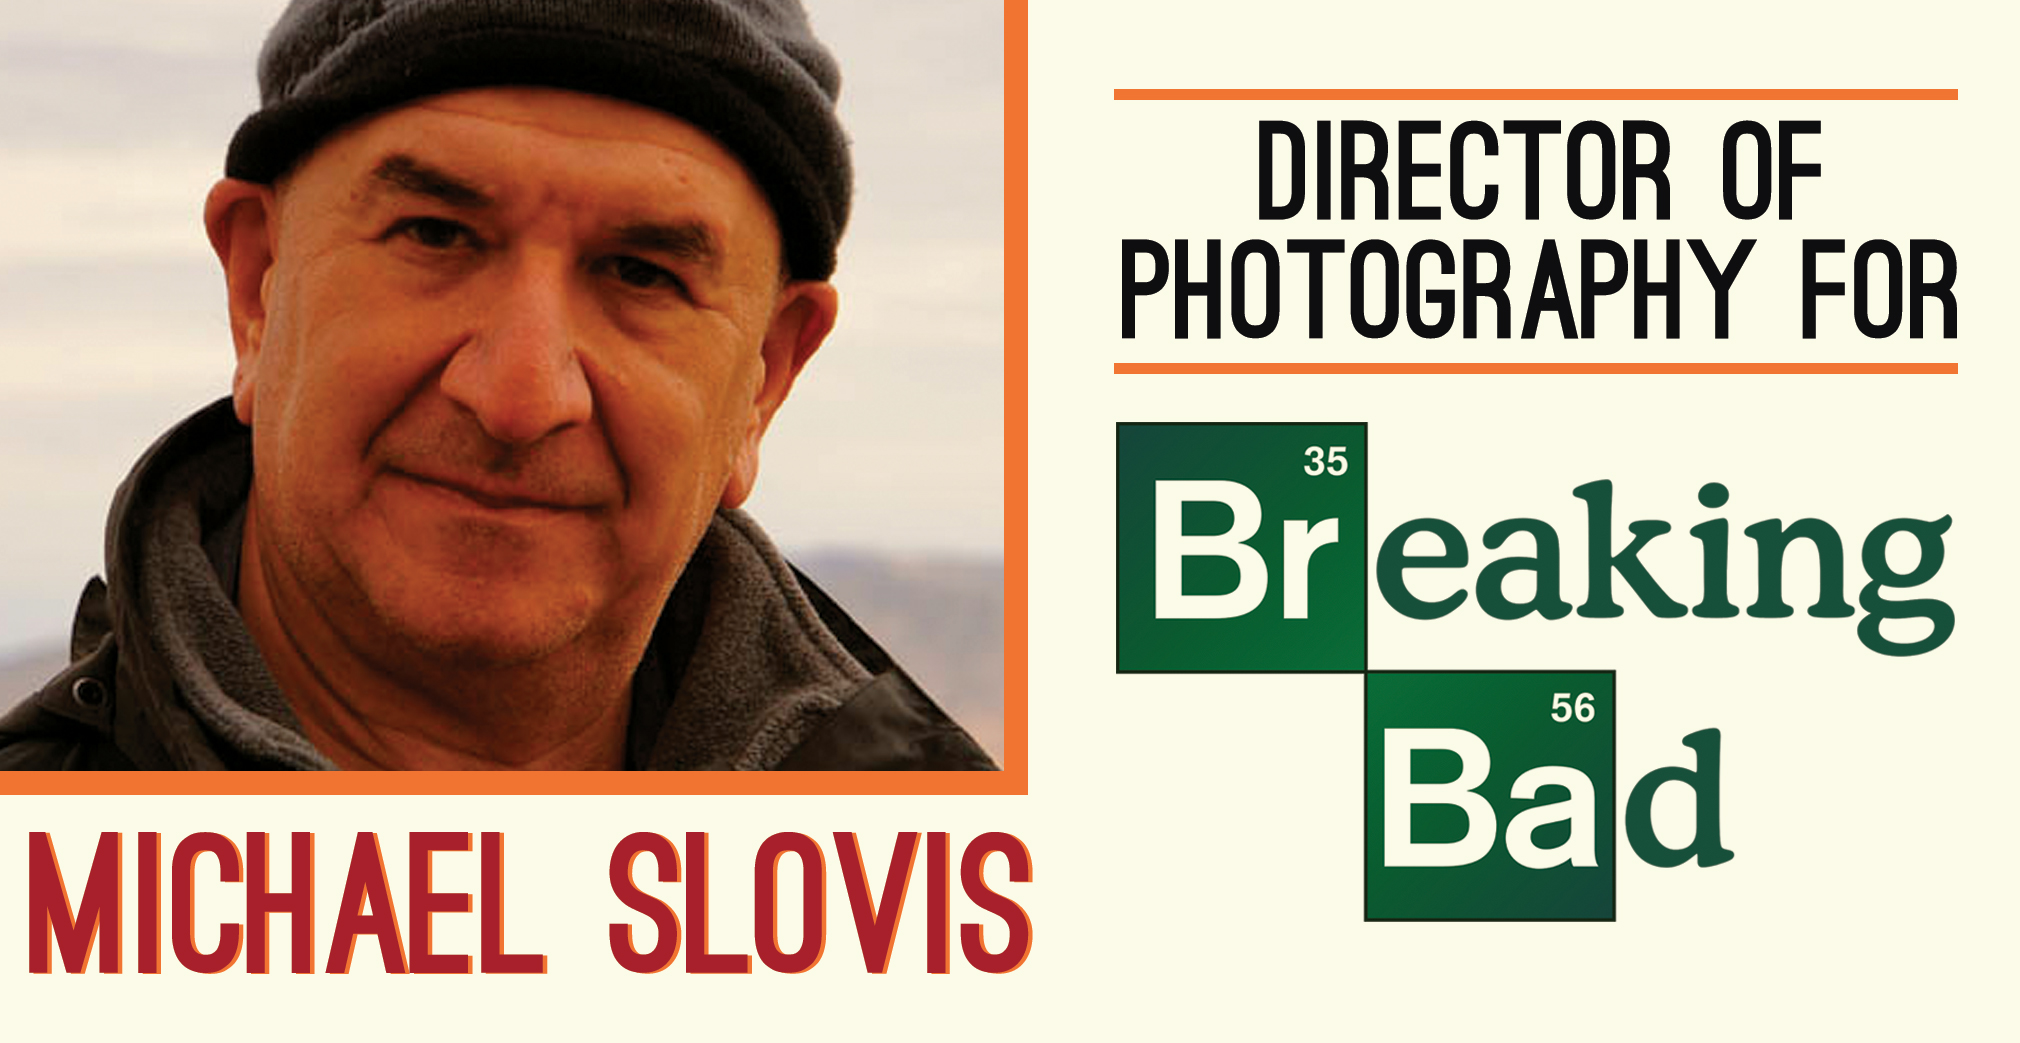 Breaking Bad Breakdown (with Michael Slovis, Director of Photography)